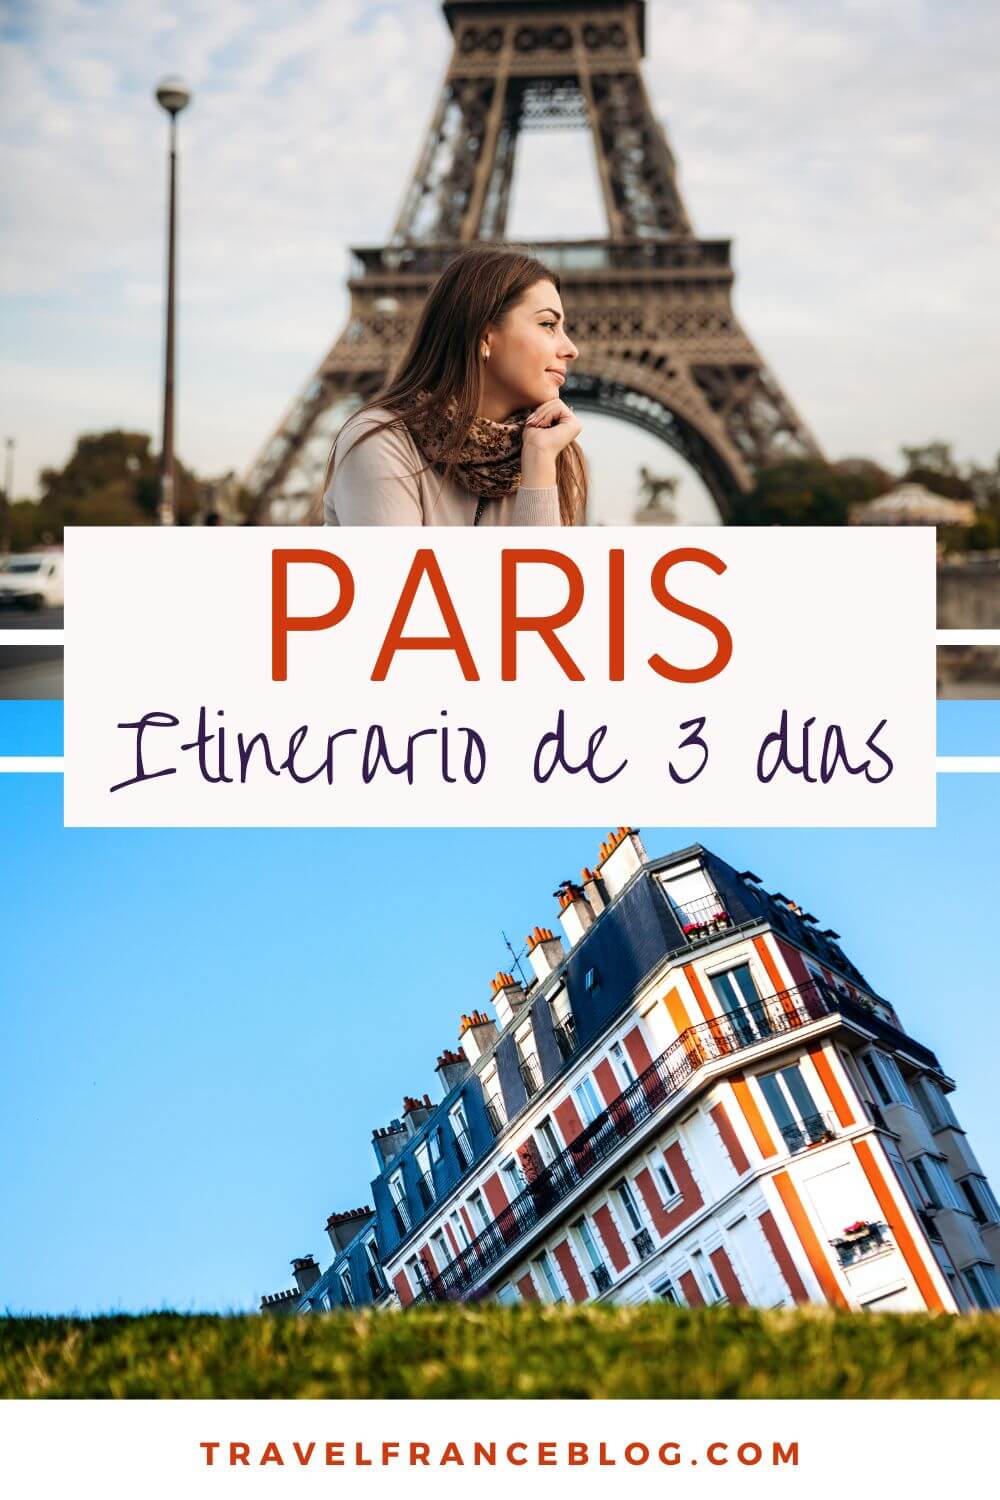 Paris en 3 días, guía completa con itinerario